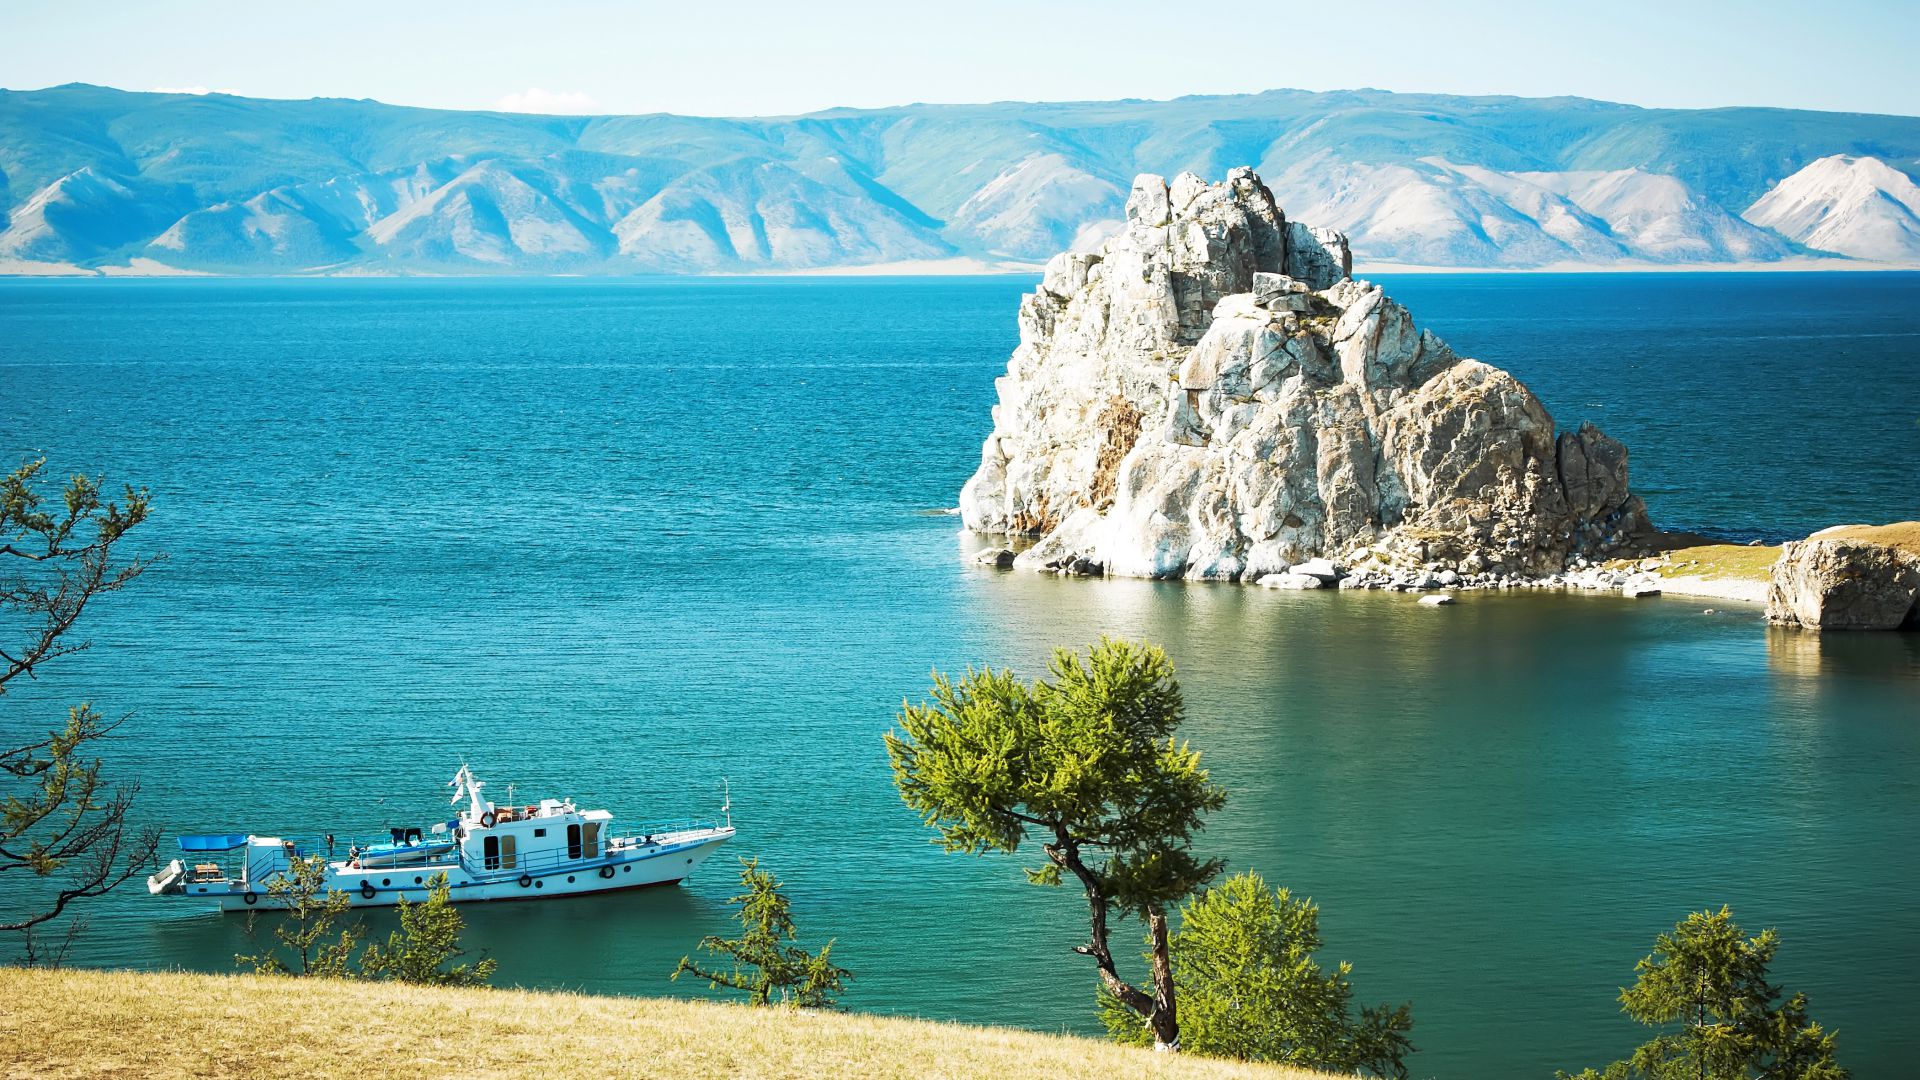 Байкал, 5k, 4k, скалы, озеро, берег, Baikal, 5k, 4k wallpaper, rocks, lake, shore (horizontal)